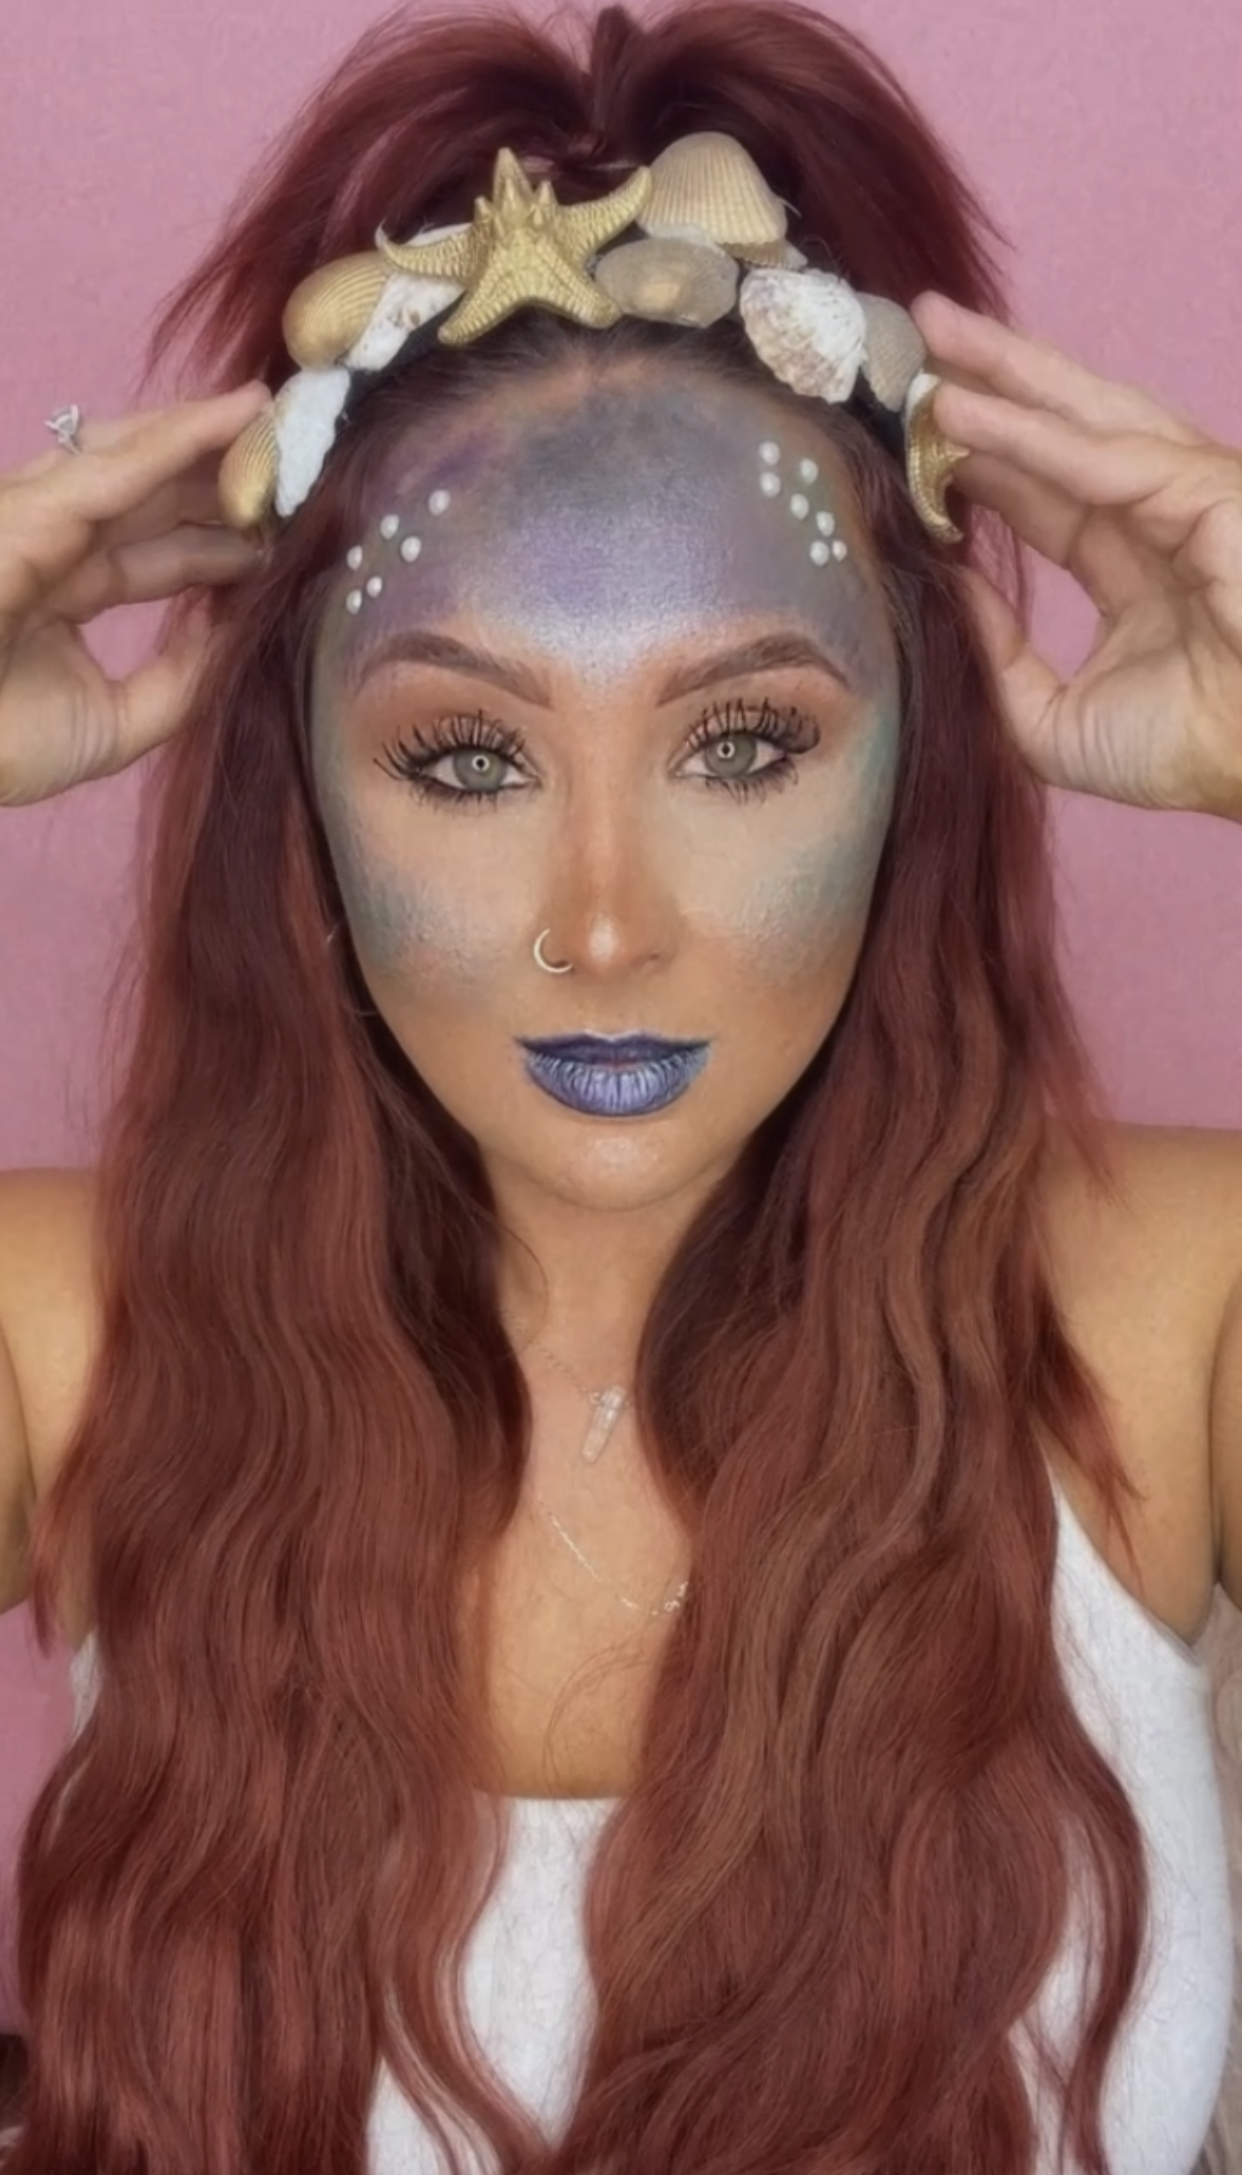 girl in mermaid costume putting on shell headband